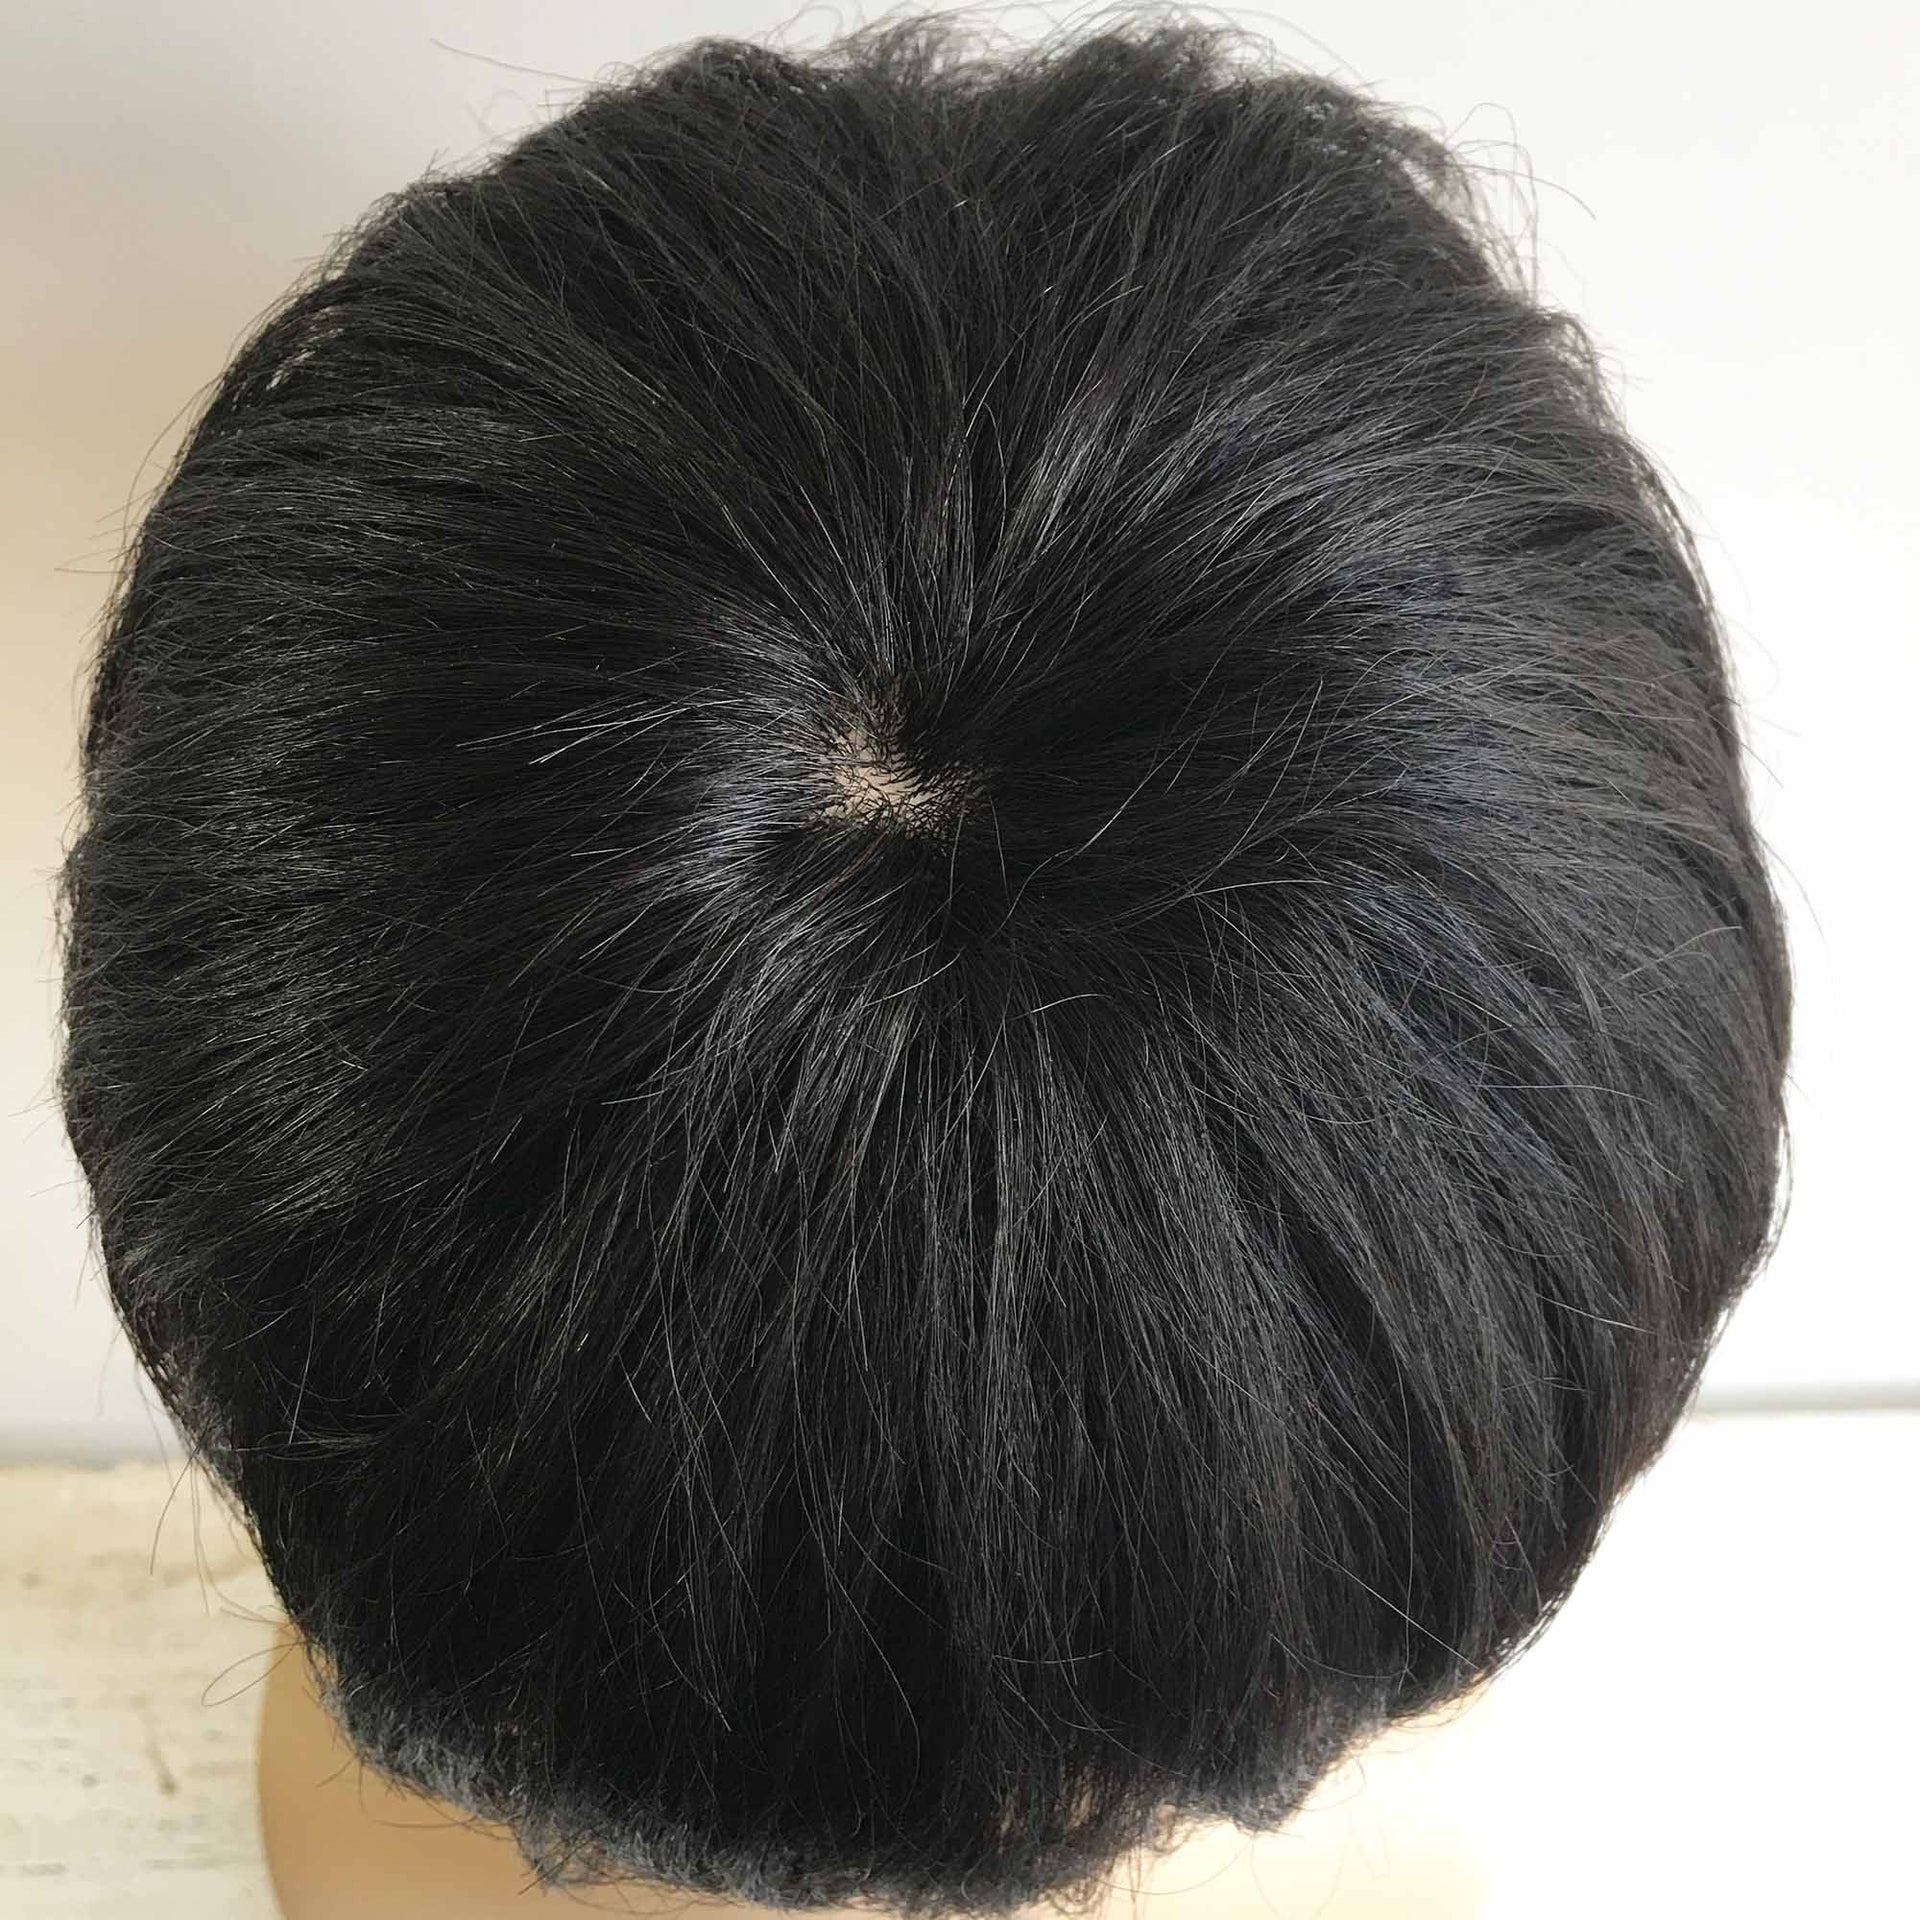 nevermindyrhead Men Natural Black Real Human Hair Short Straight Fringe Bangs Clip In Topper Toupee